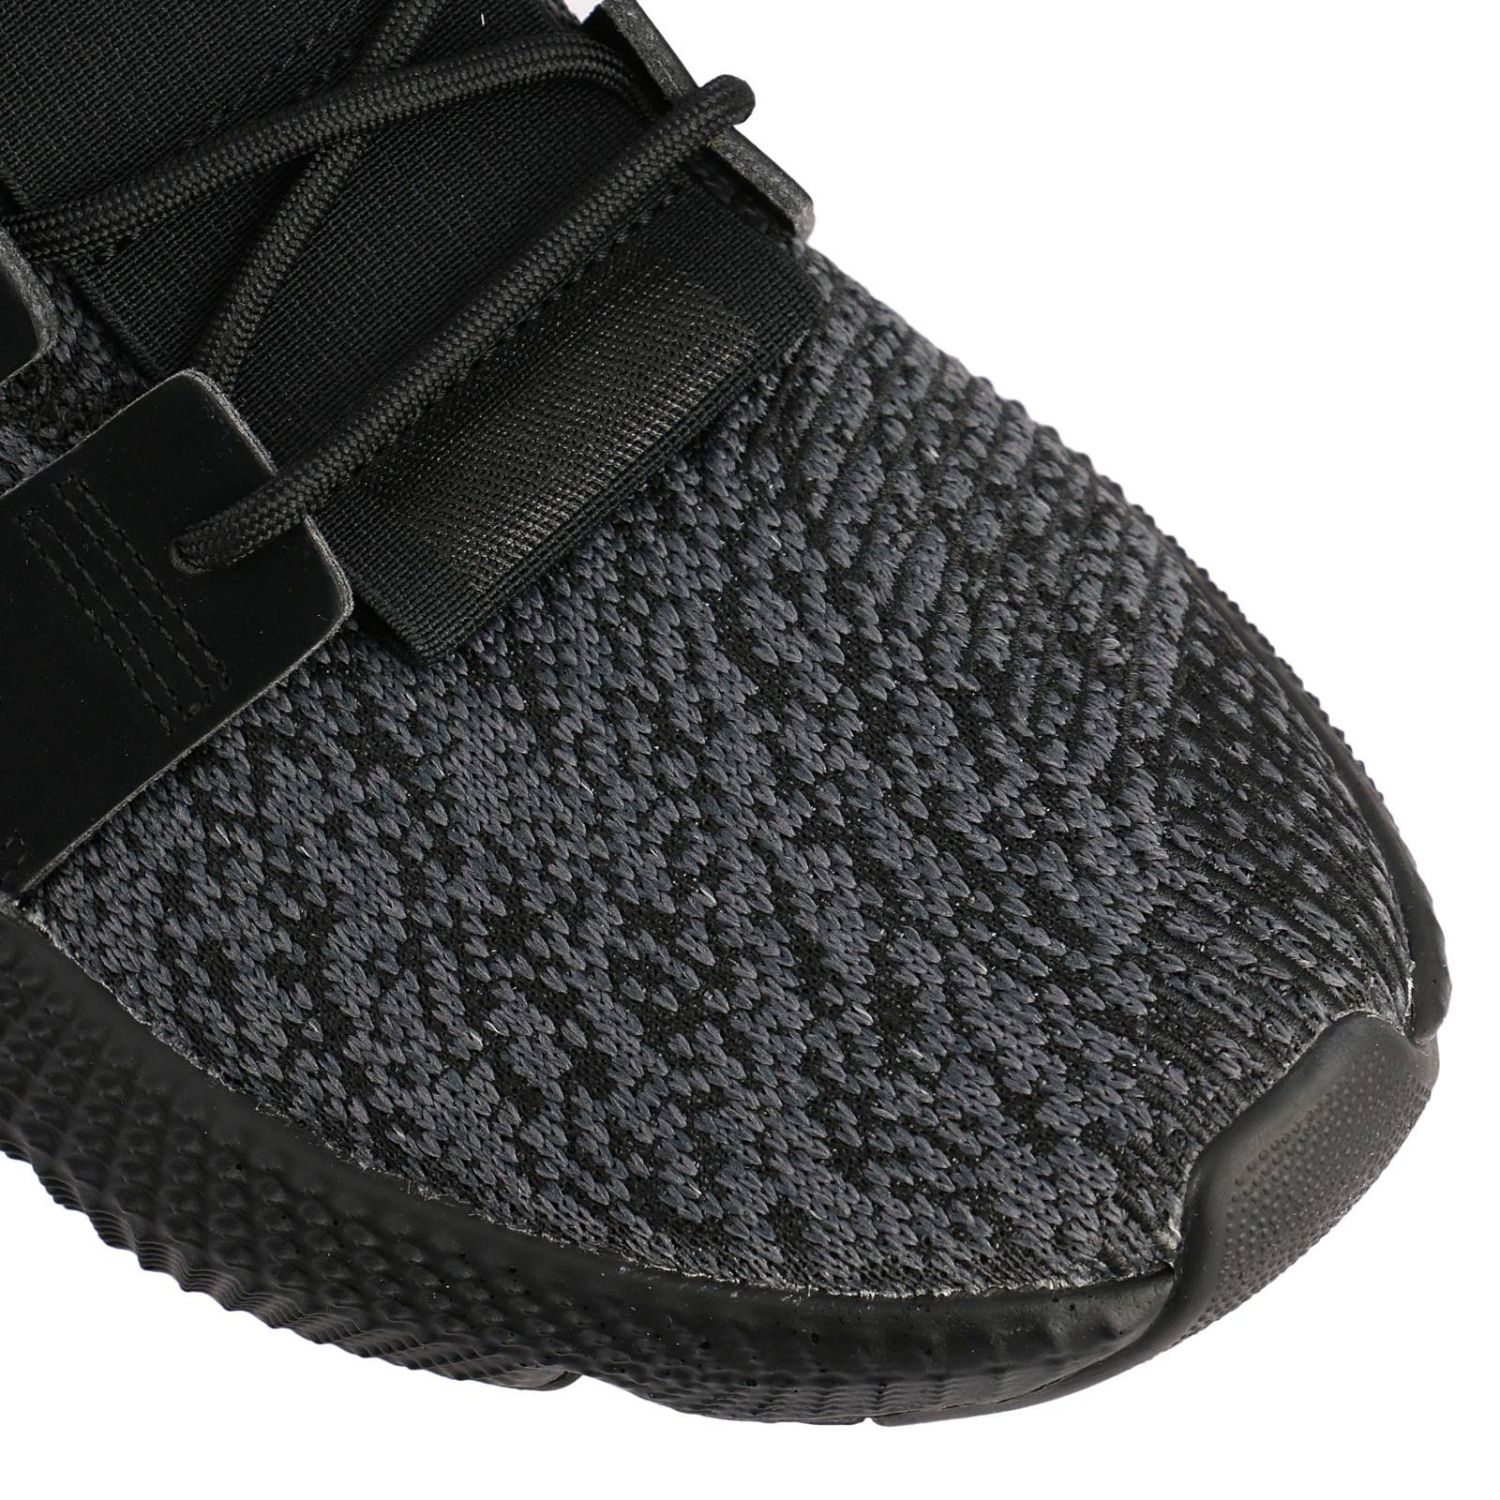 Adidas Originals Outlet: Prophere Originals sneakers in knit mélange ...